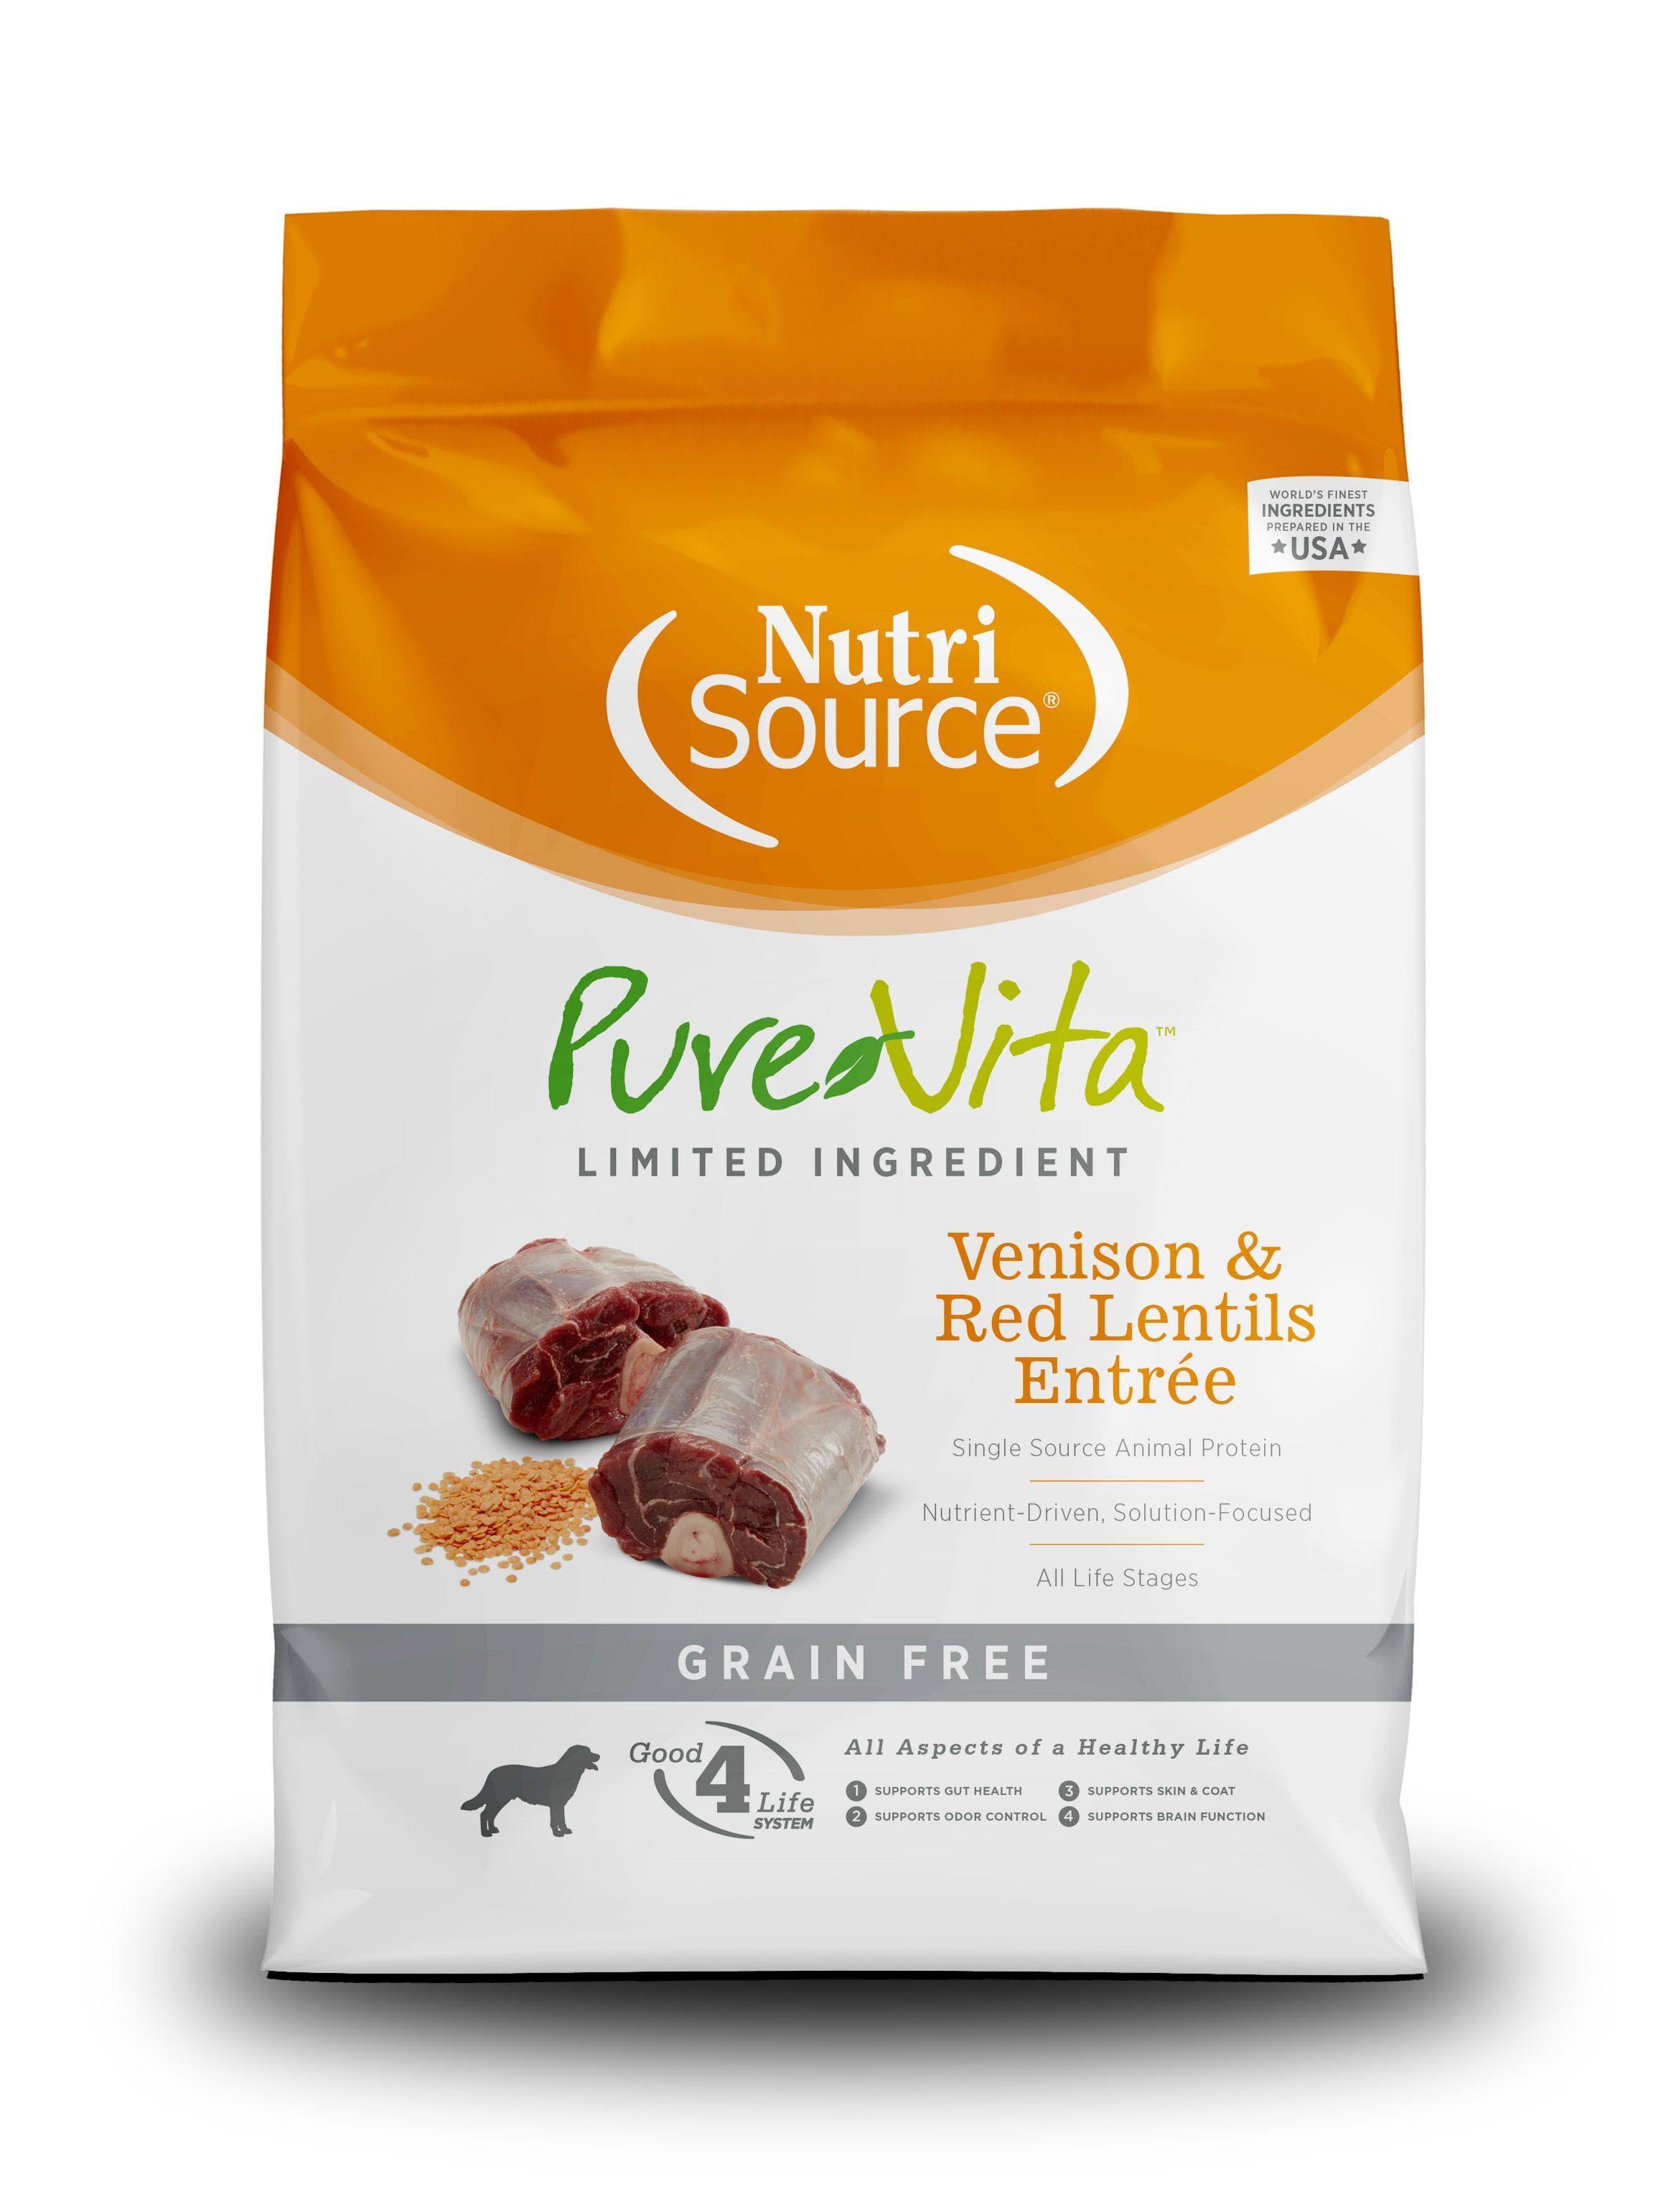 PureVita Grain Free Venison & Red Lentils Dog Food 25 lb